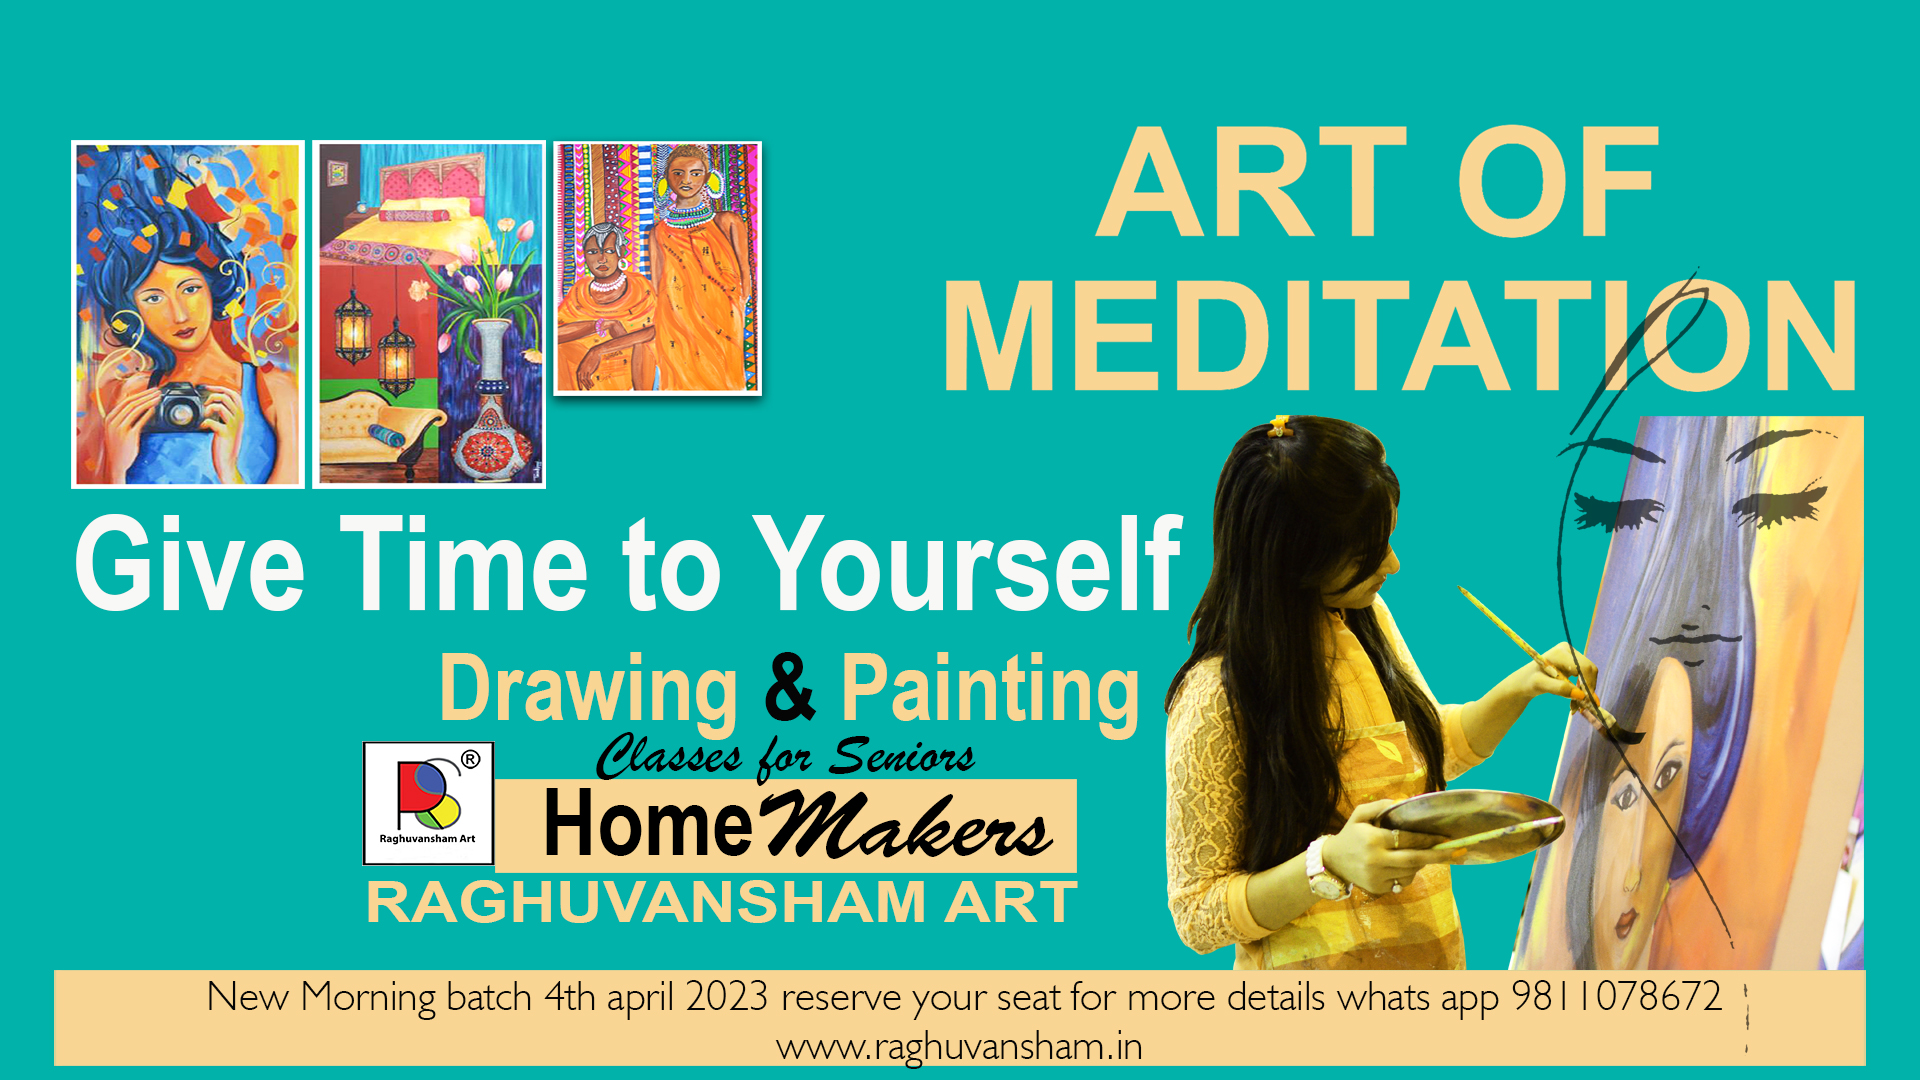 Painting Certificate Course the Art of MeditationEventsWorkshops - SeminarsWest DelhiPunjabi Bagh